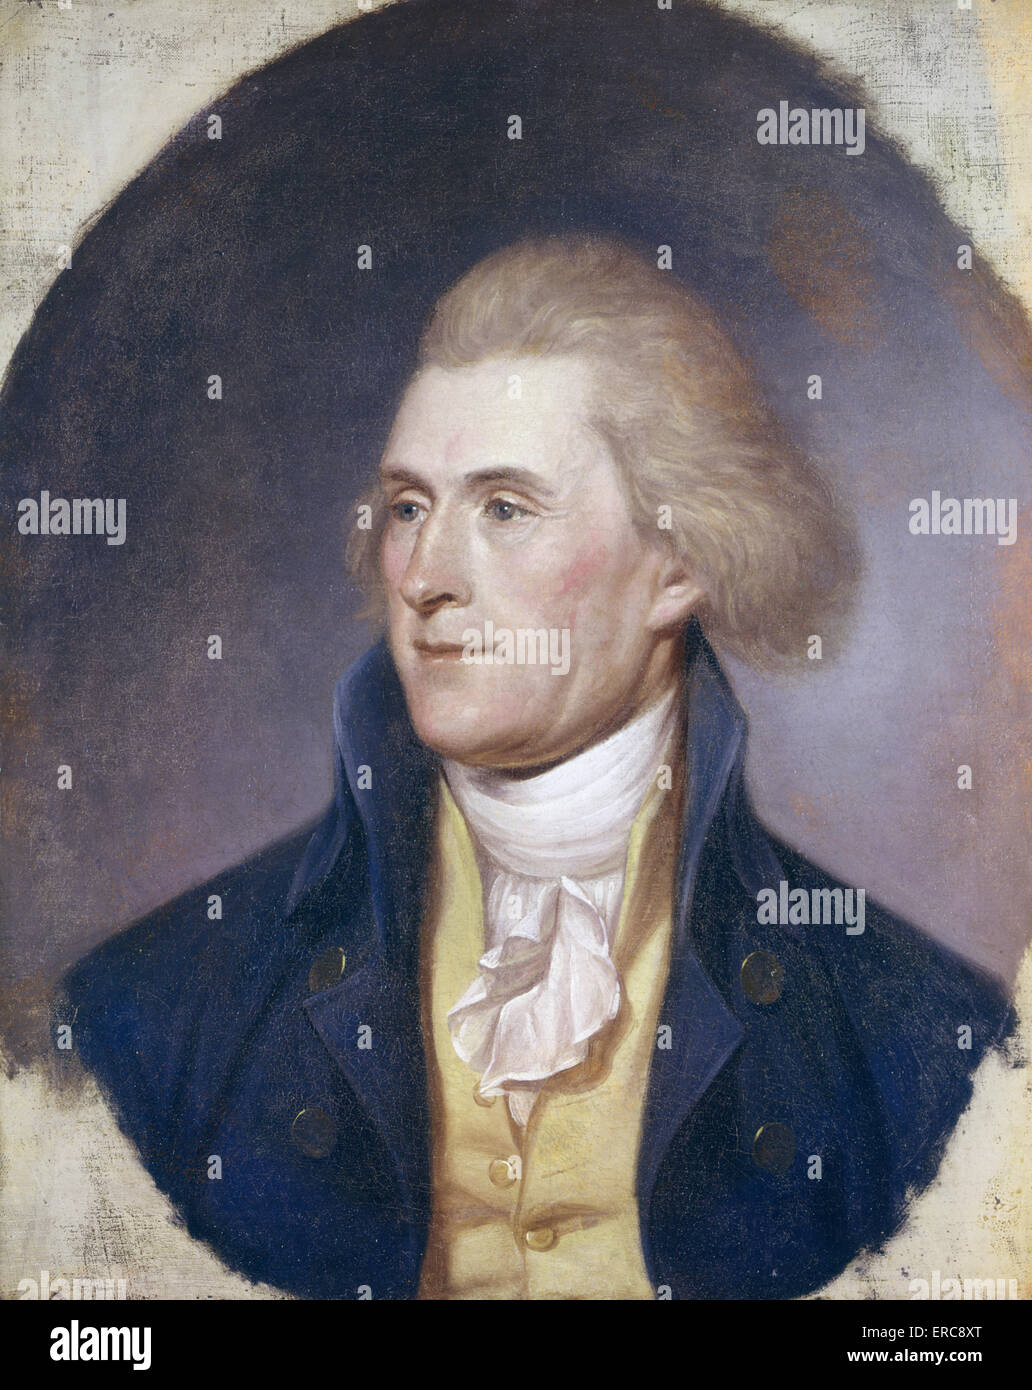 1791 PORTRÄT THOMAS JEFFERSON VON CHARLES WILLSON PEALE AMERIKANISCHE PRÄSIDENT HAUPTAUTOR UNABHÄNGIGKEITSERKLÄRUNG Stockfoto